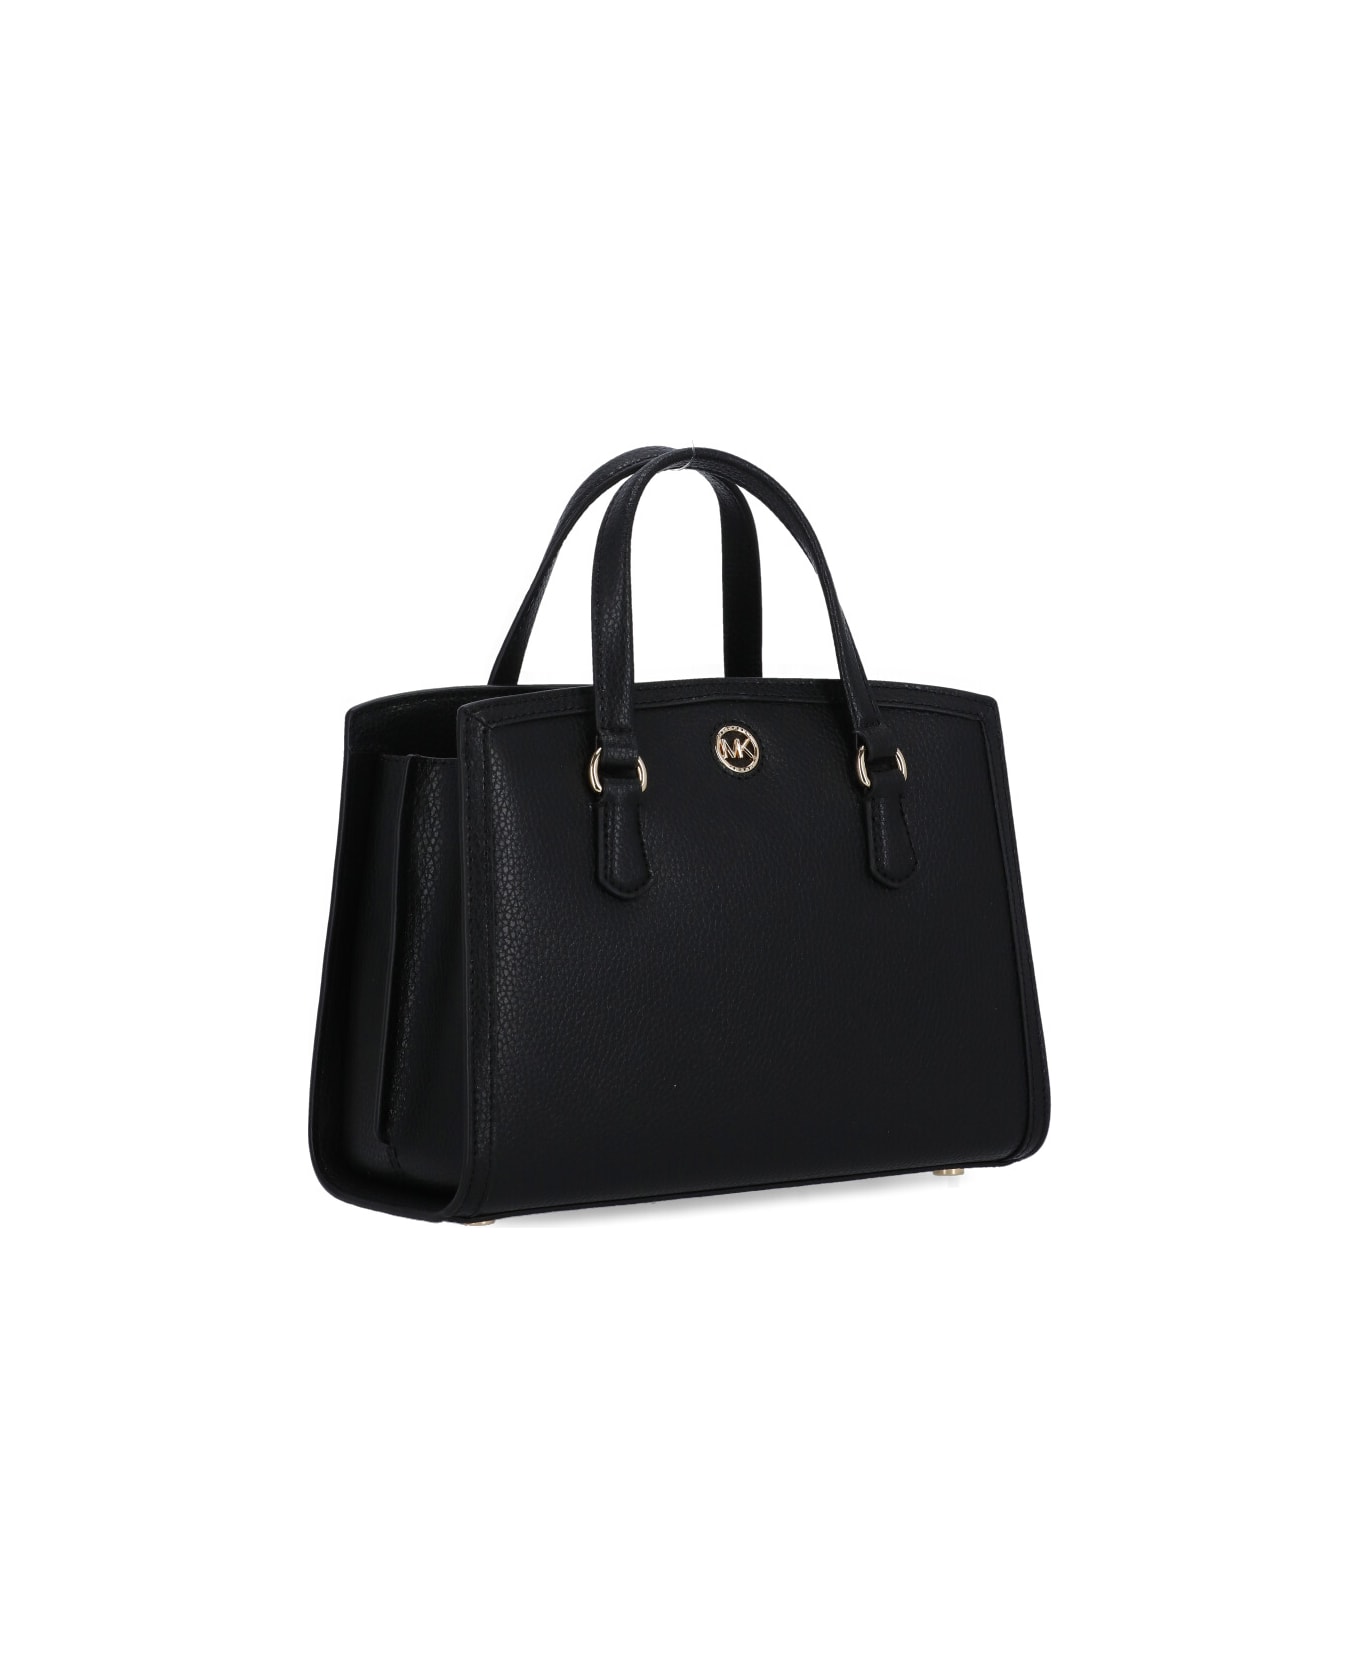 MICHAEL Michael Kors Chantal Leather Handbag - Black